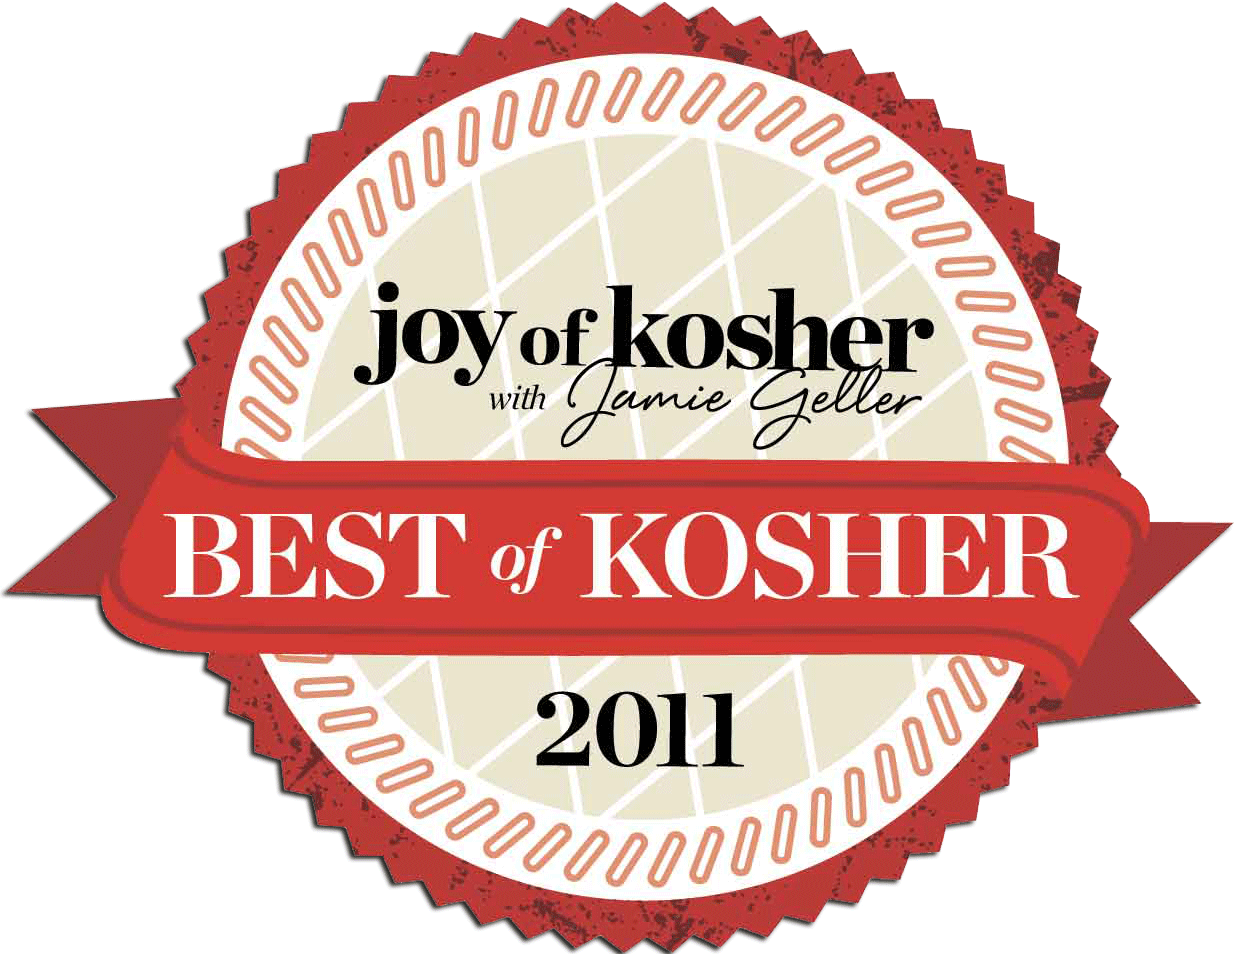 Best Kosher Cookbook of 2011